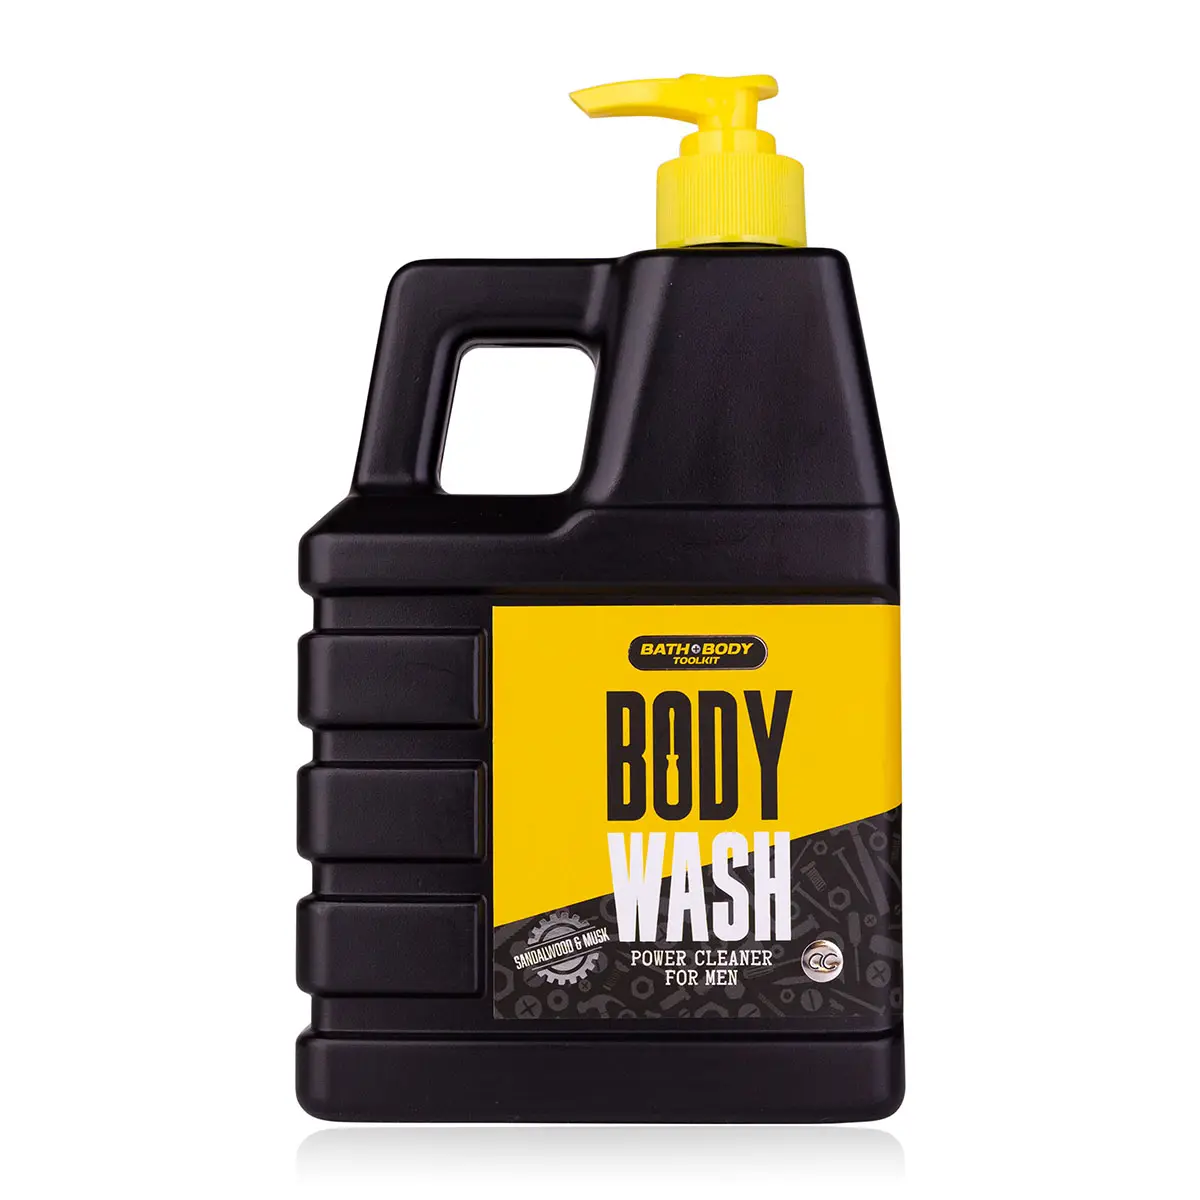 Pump Dispenser Body Wash Bath Shower Gel Toolkit in Canister Form Yellow Black Sandalwood Musk Fragrance bath accessories set